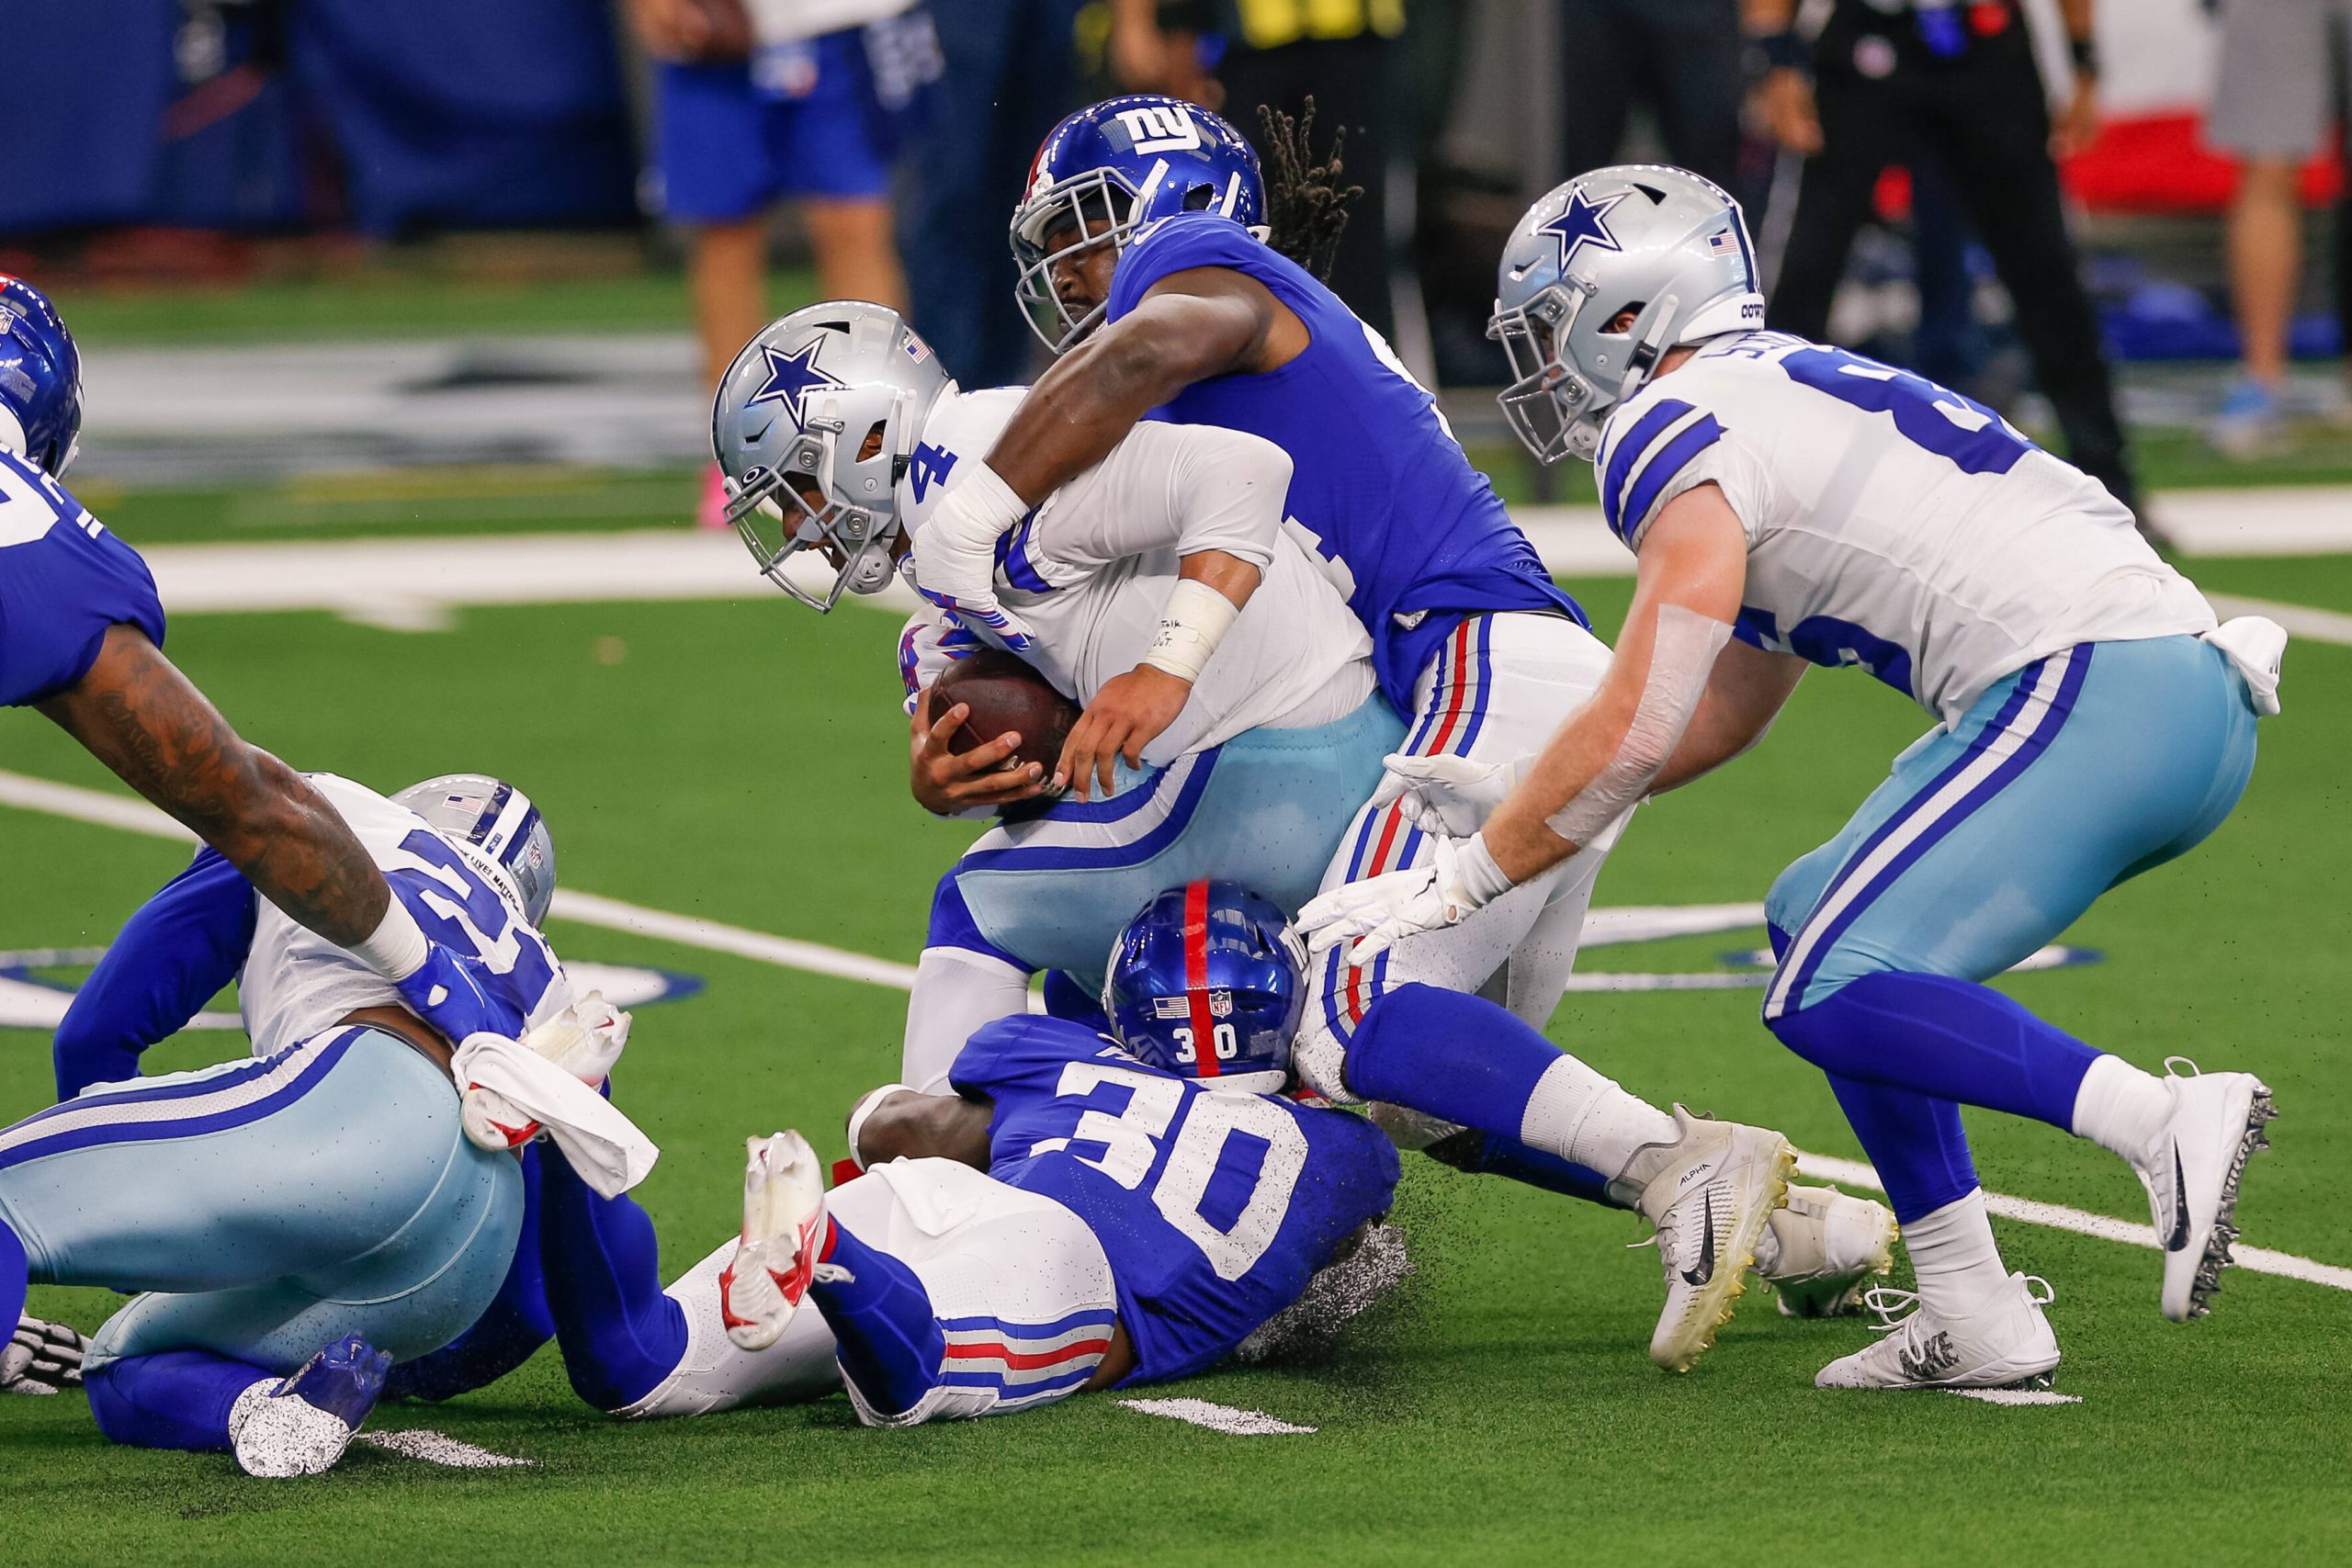 ARLINGTON, TX - OCTOBER 11: Dallas Cowboys Quarterback Dak Prescott (4) is sacked by New York Giants Linebacker Markus G